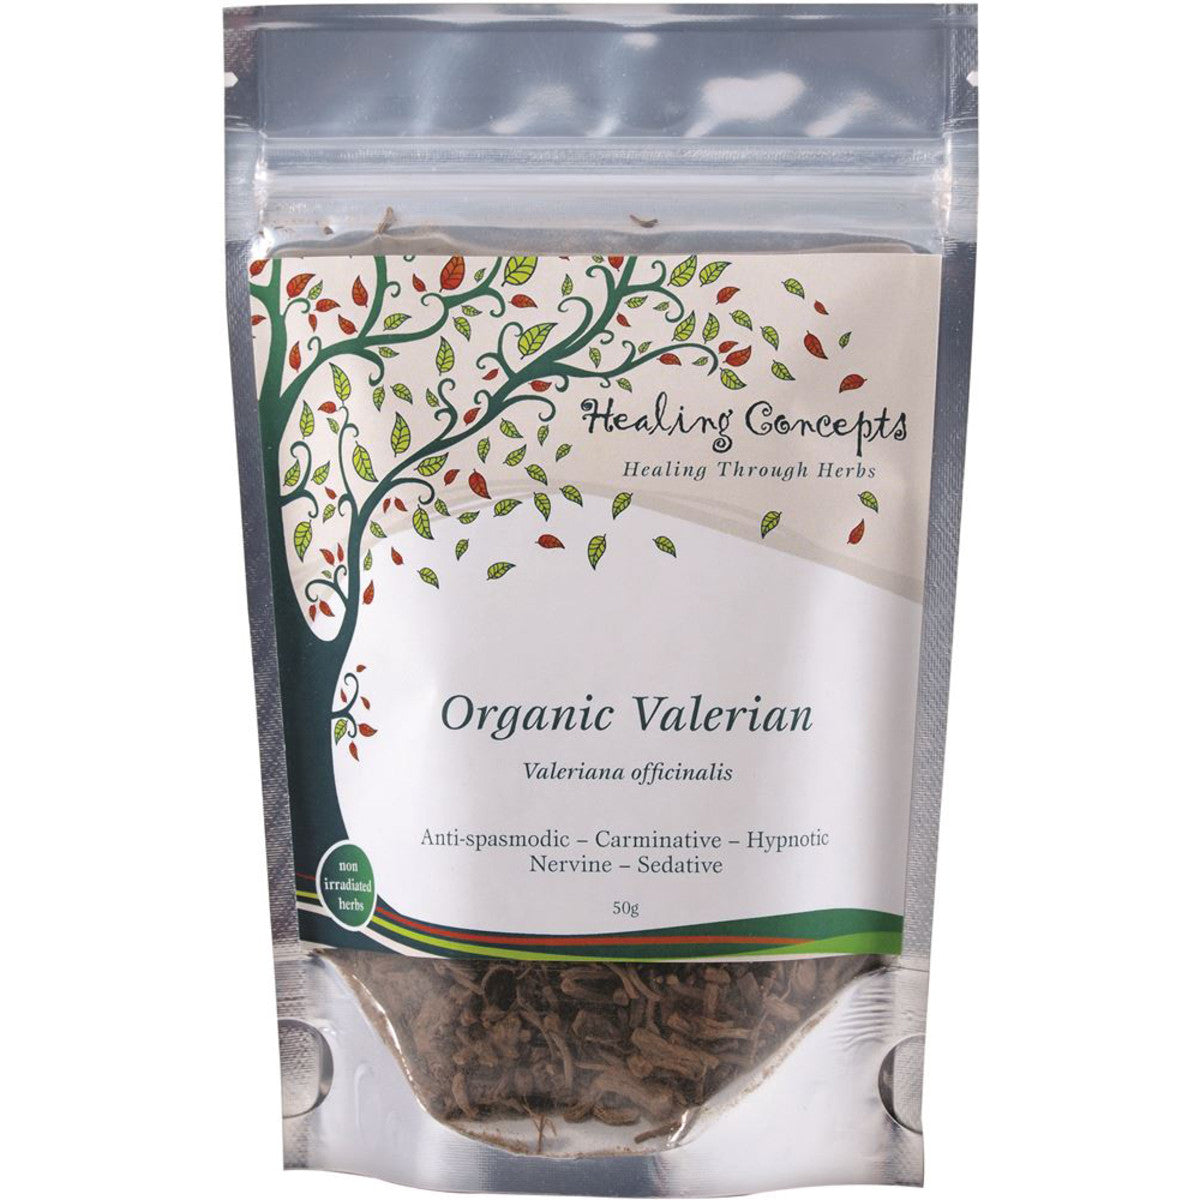 Healing Concepts Valerian Tea 50g, Organic